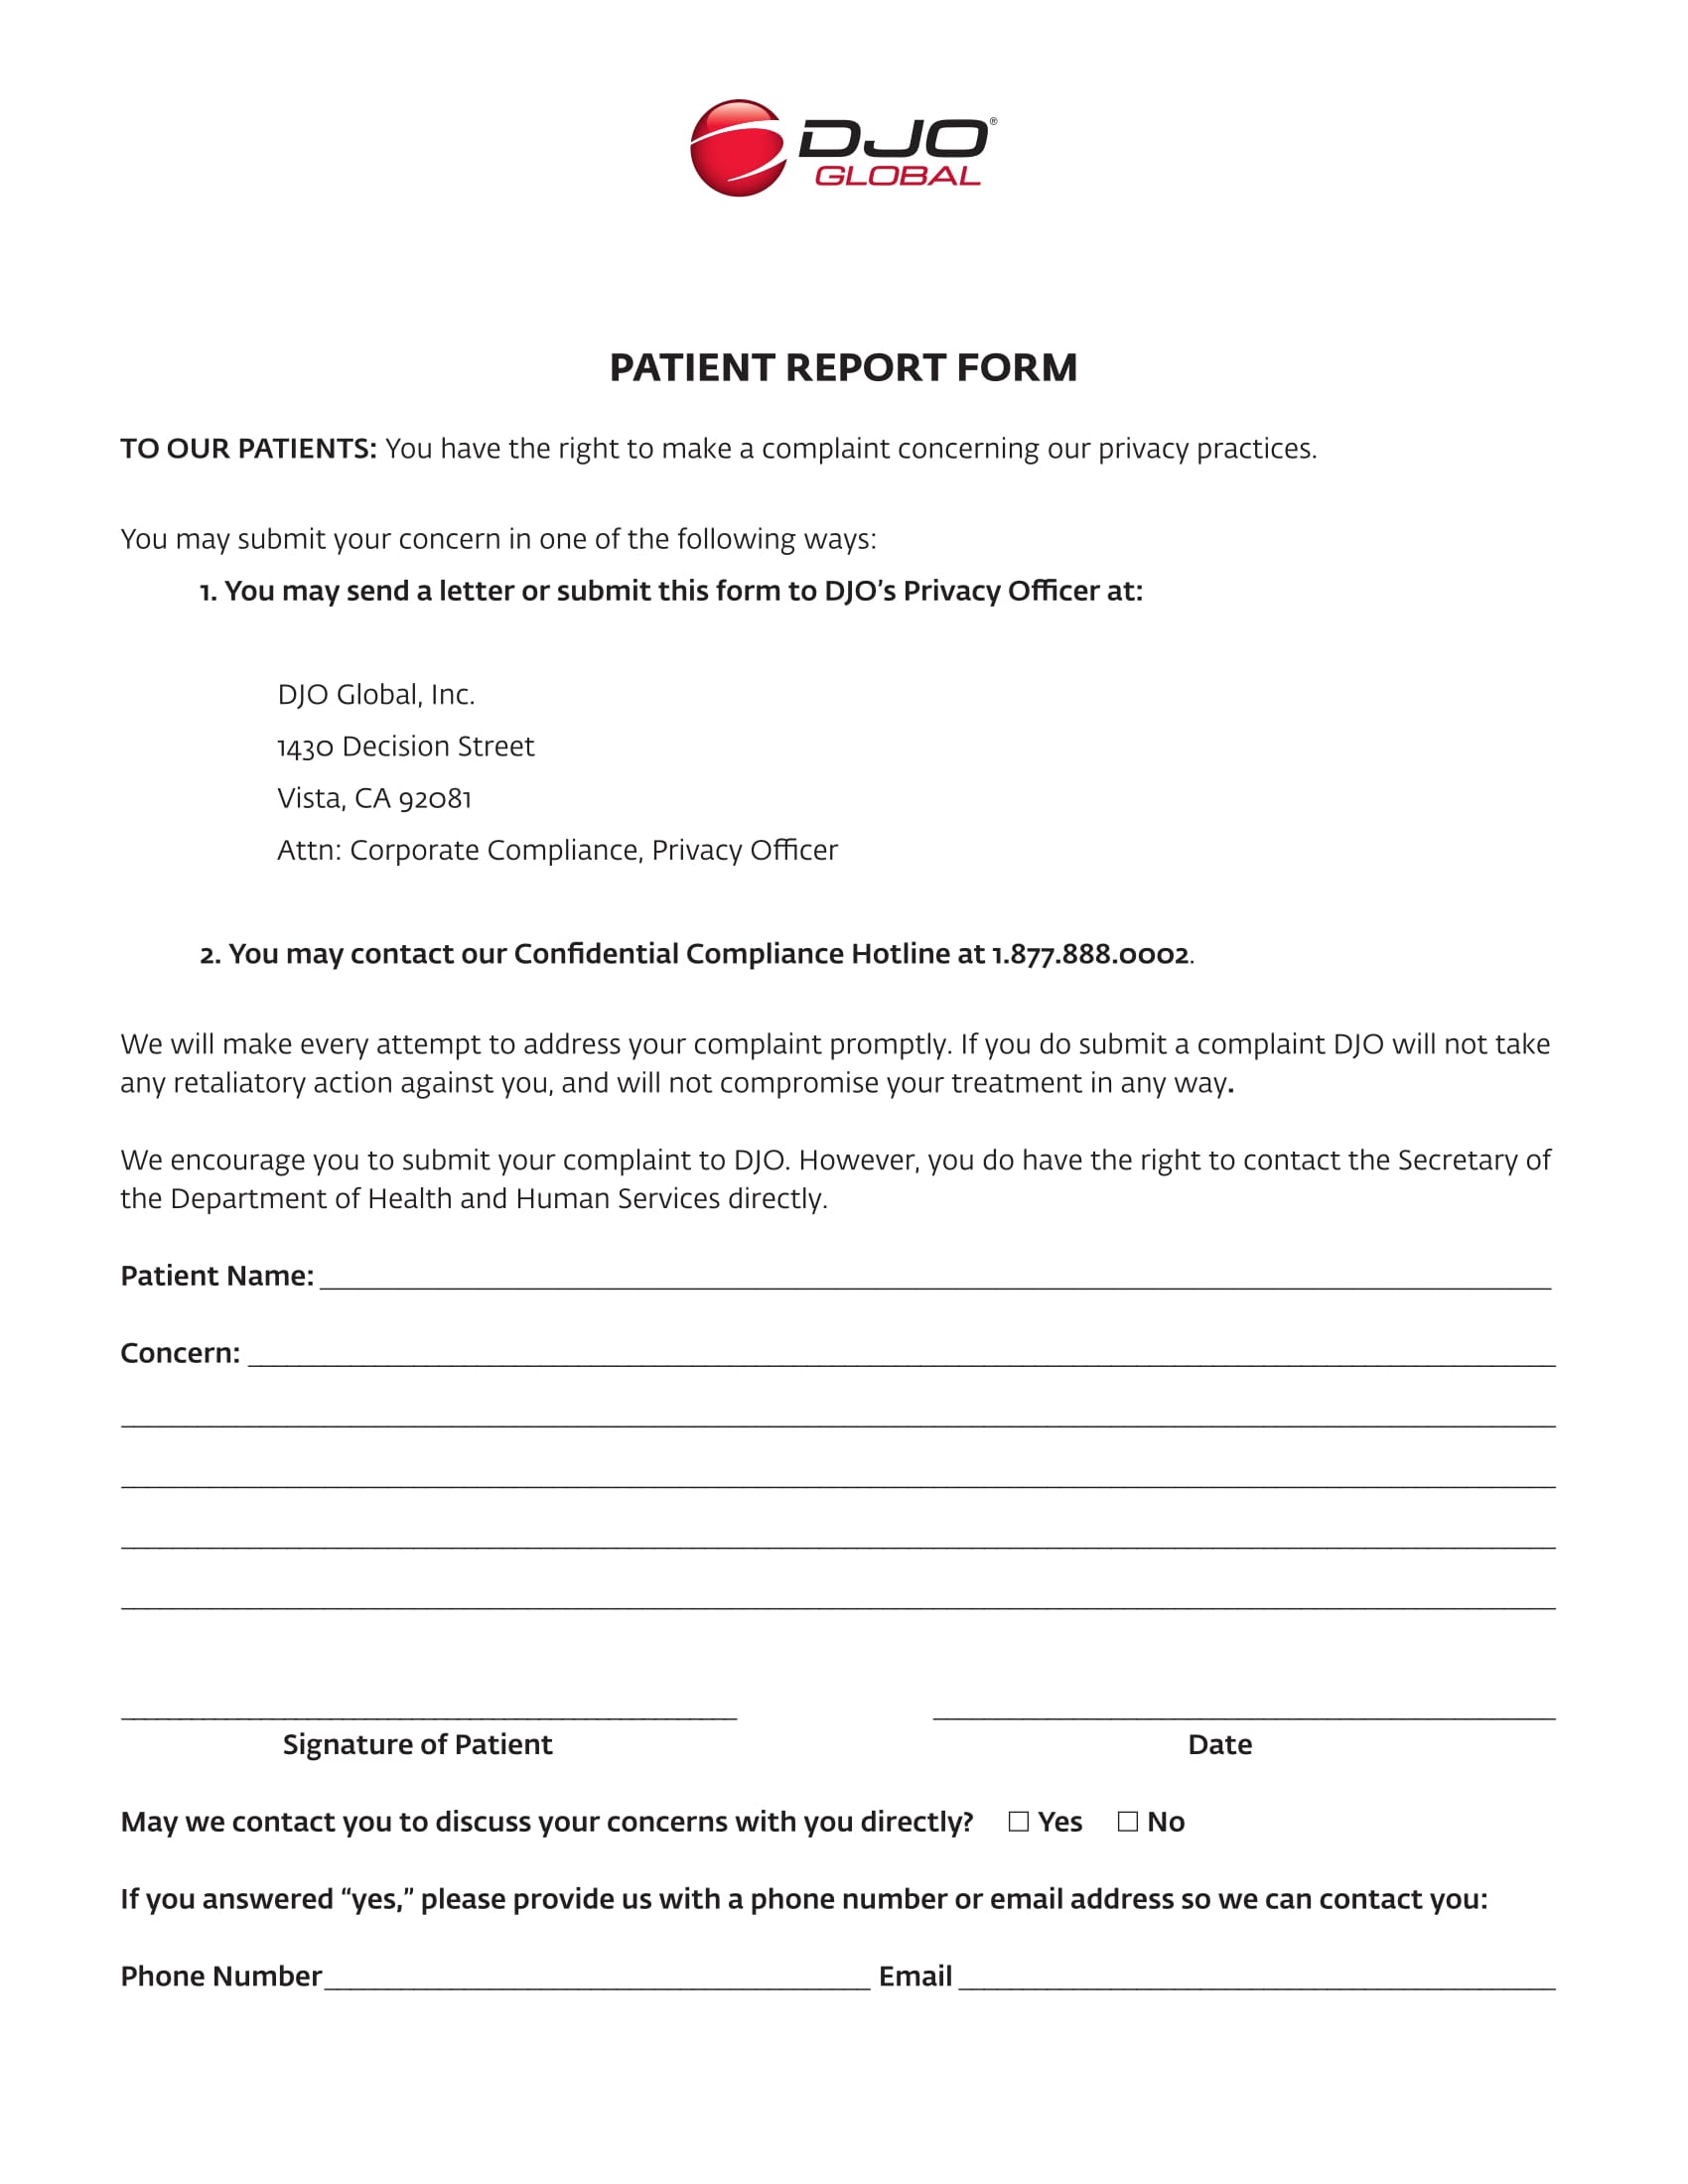 patient’s concern report form 1